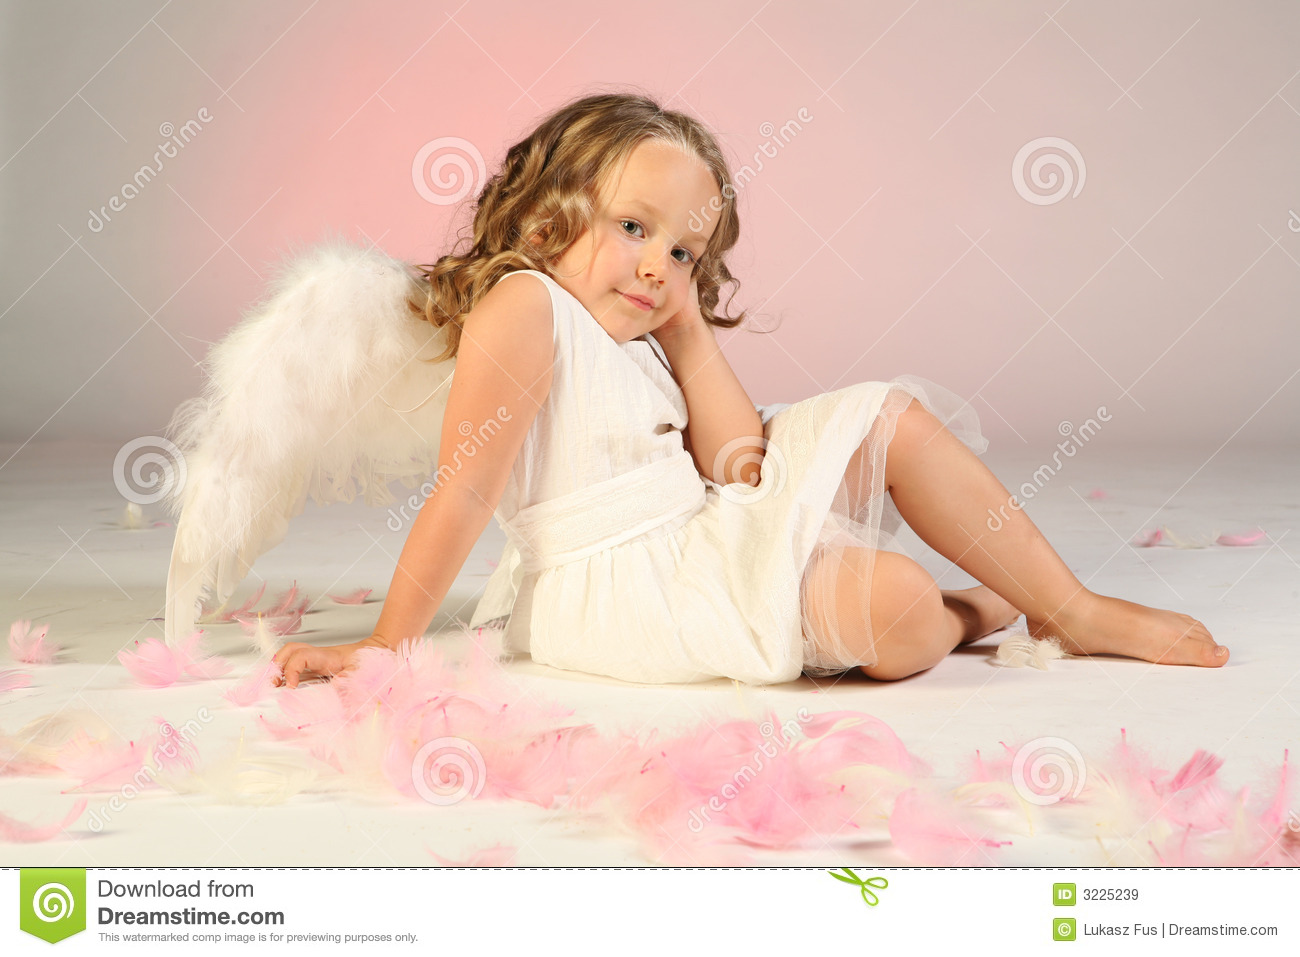 Angel pink stock photos